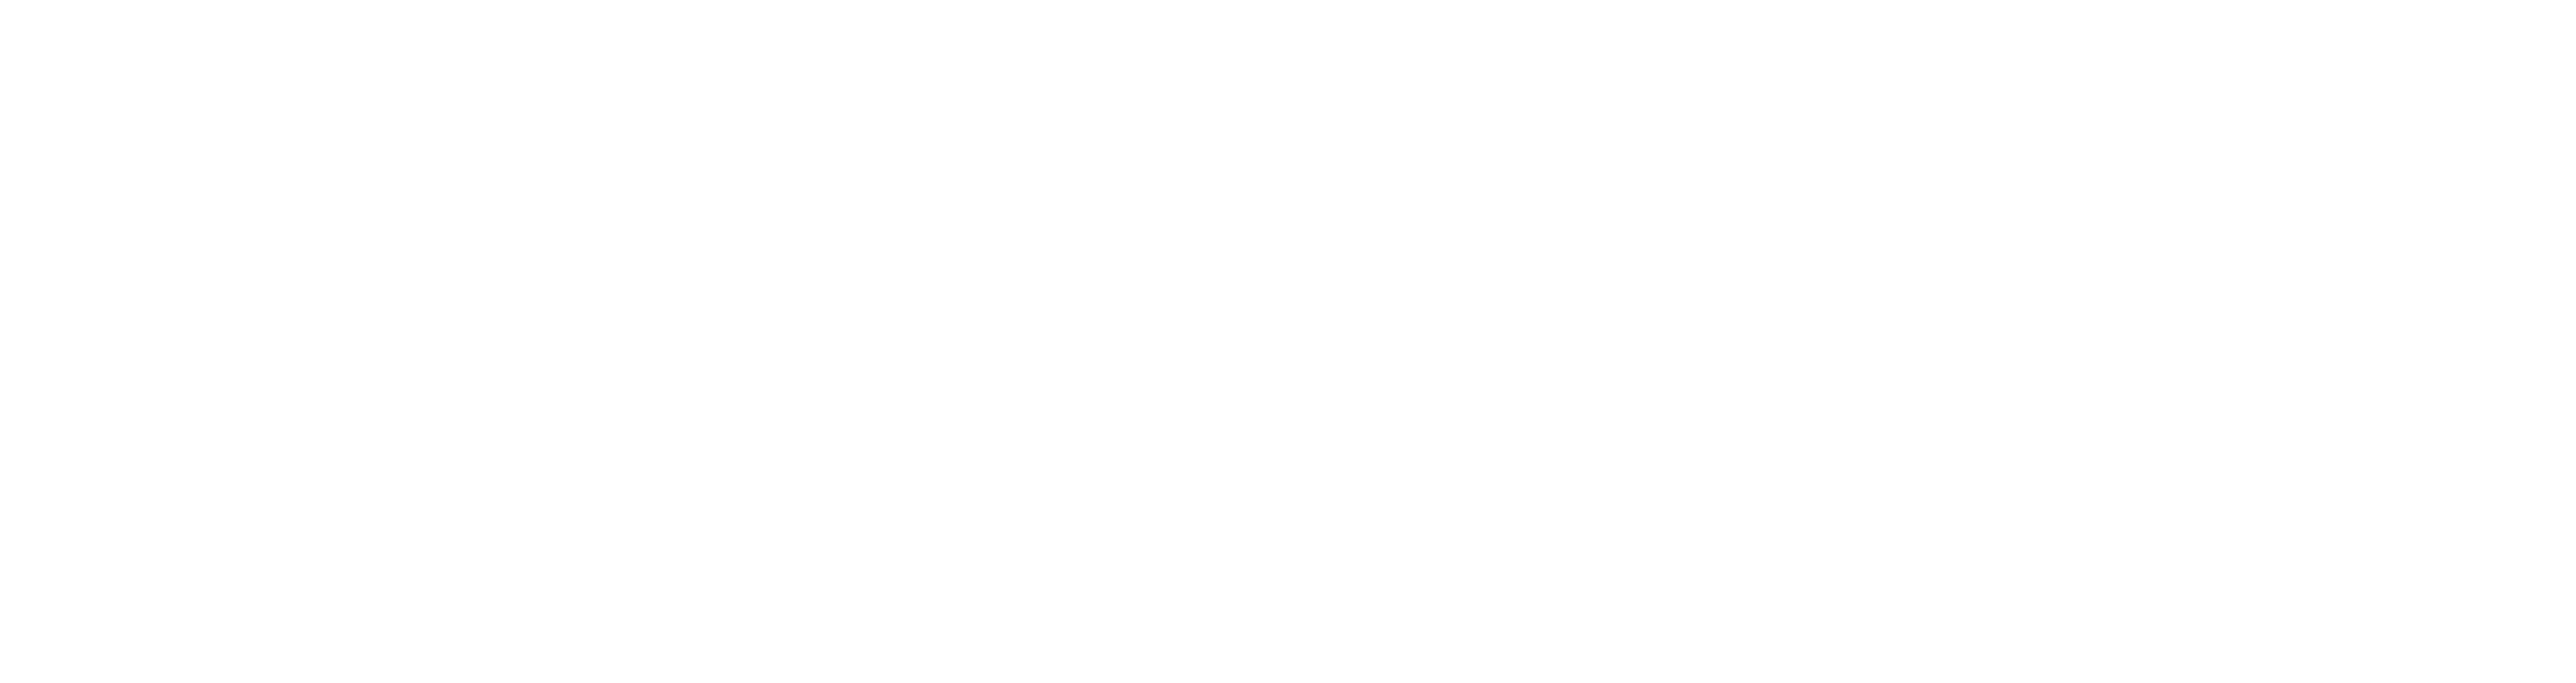 Anayan gym management software logo